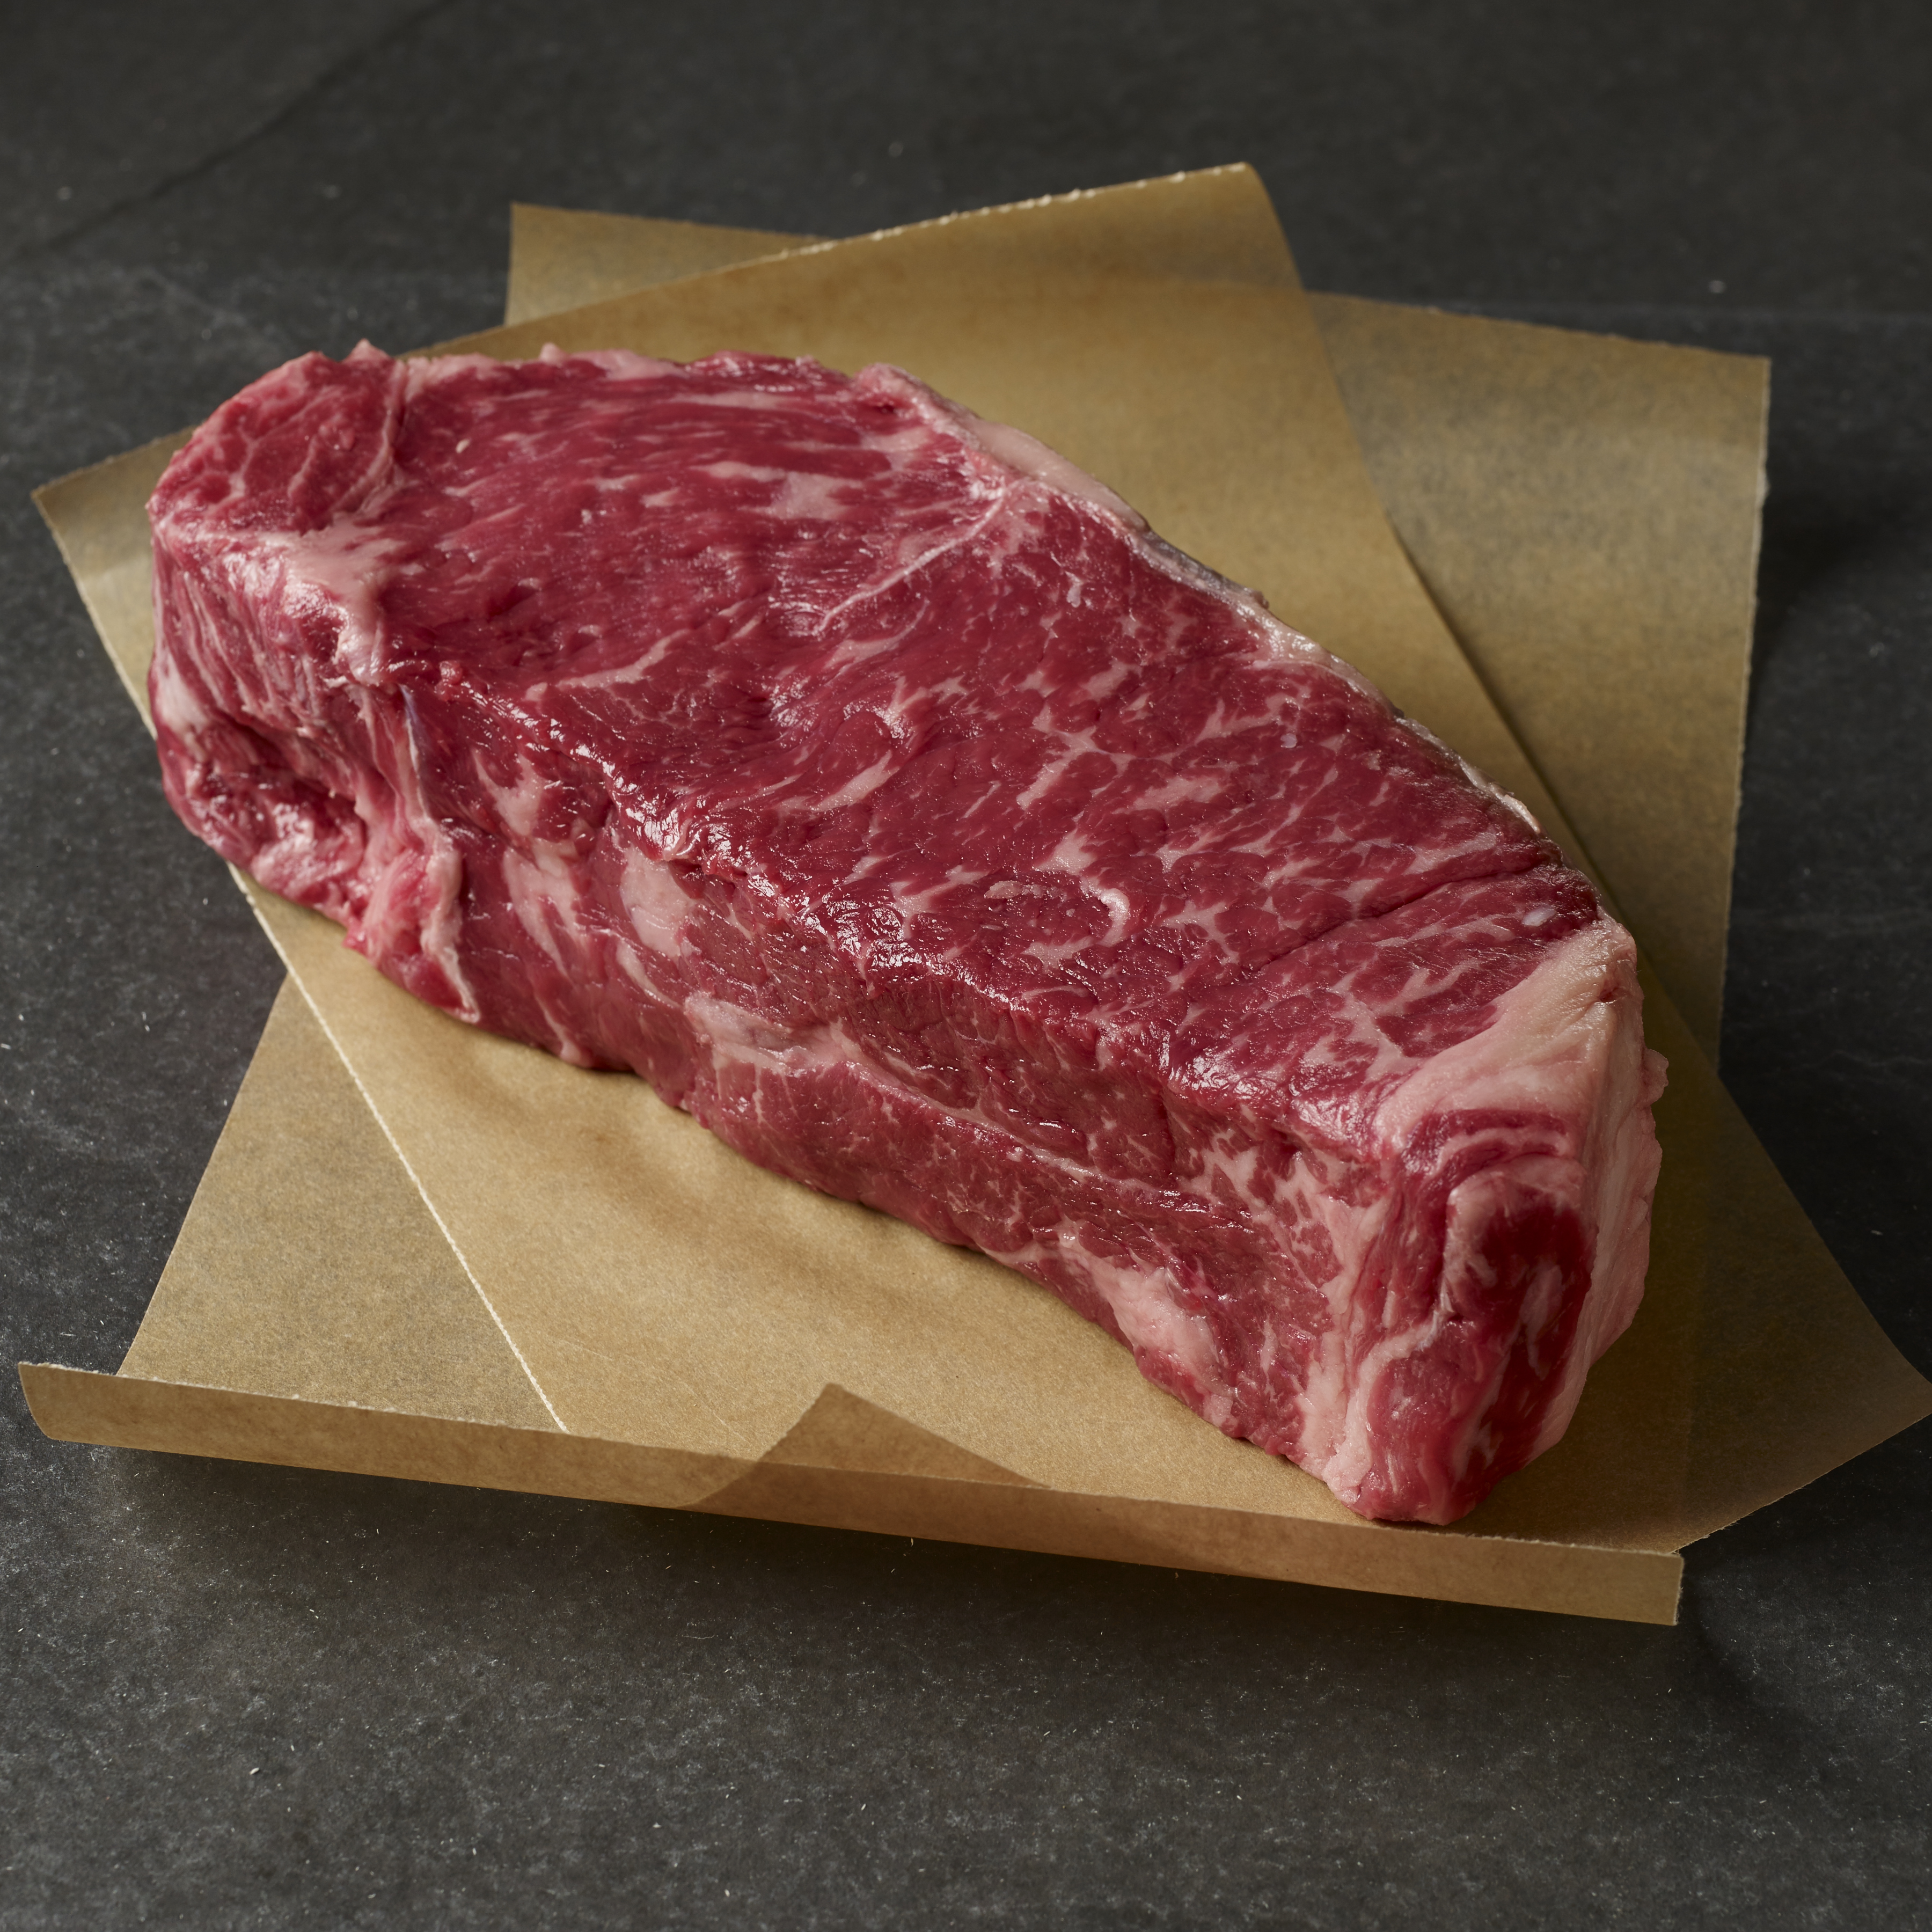 USDA Prime Dry-Aged Boneless Double Strip Steak for Two